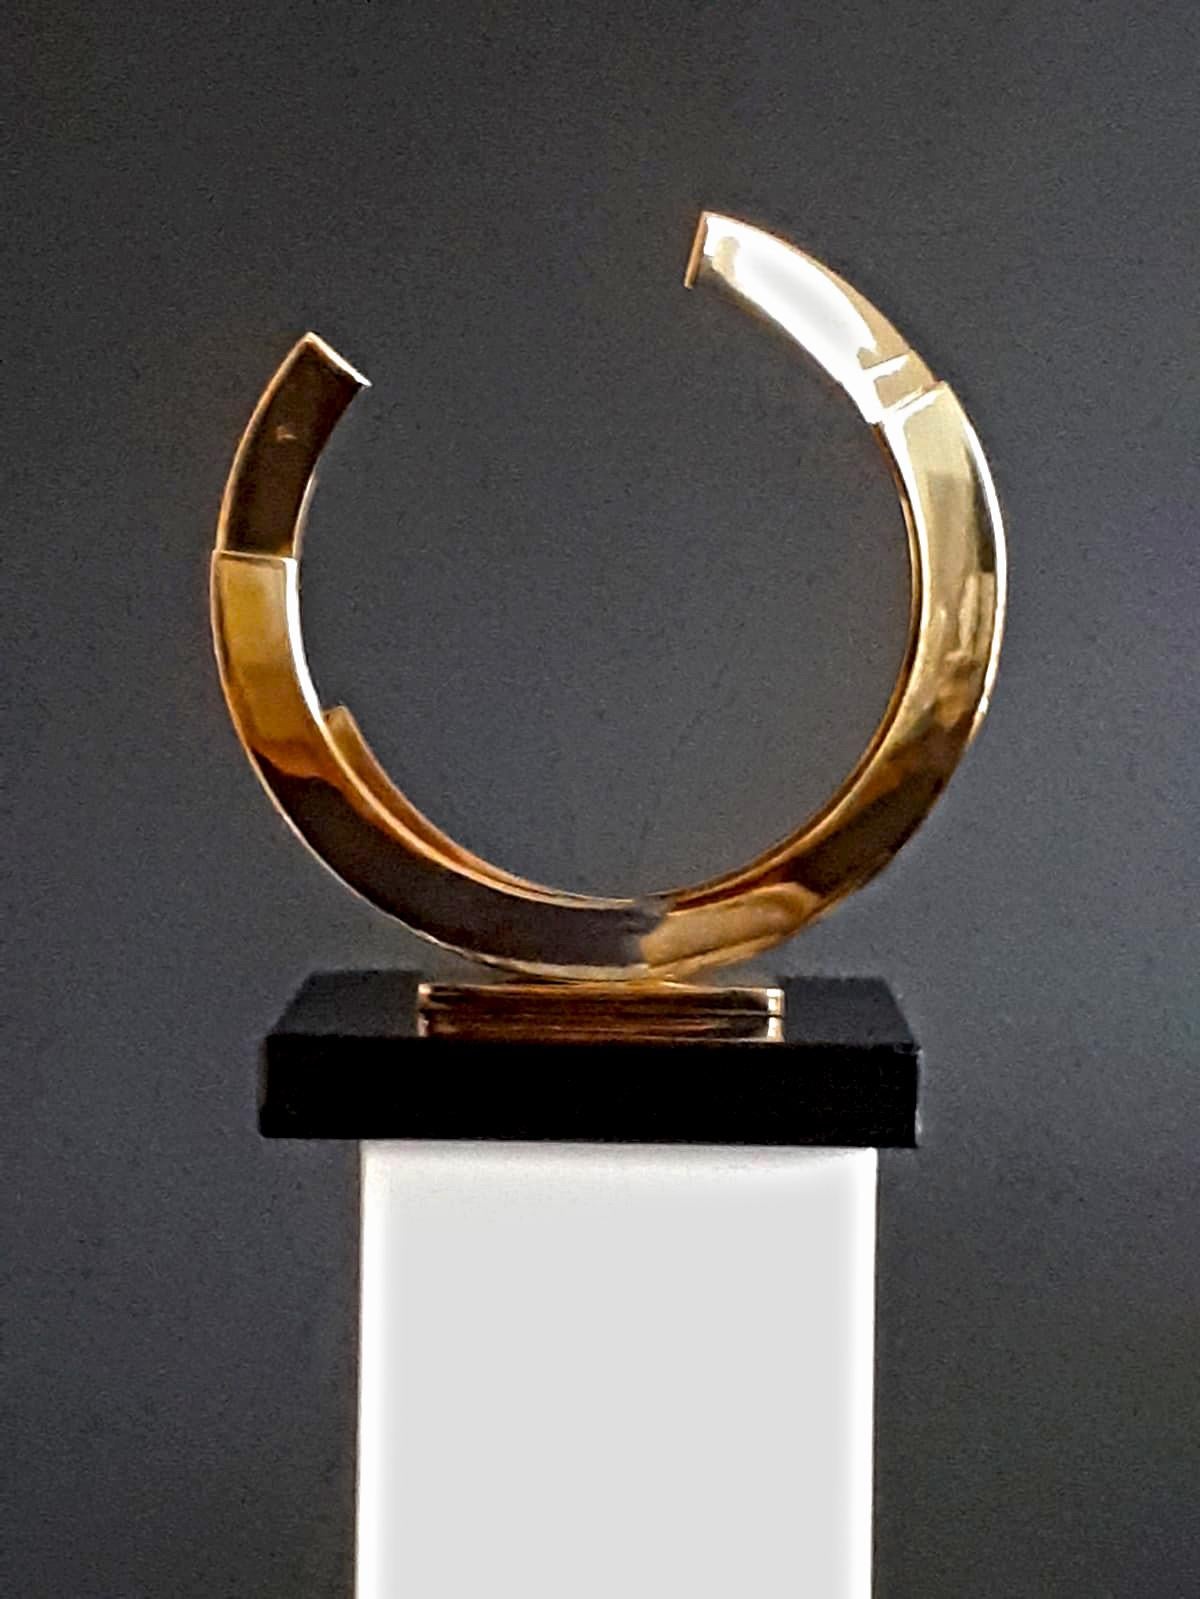 Golden Orbit by Kuno Vollet - Shiny Brass Circle Contemporary Minimal sculpture 5